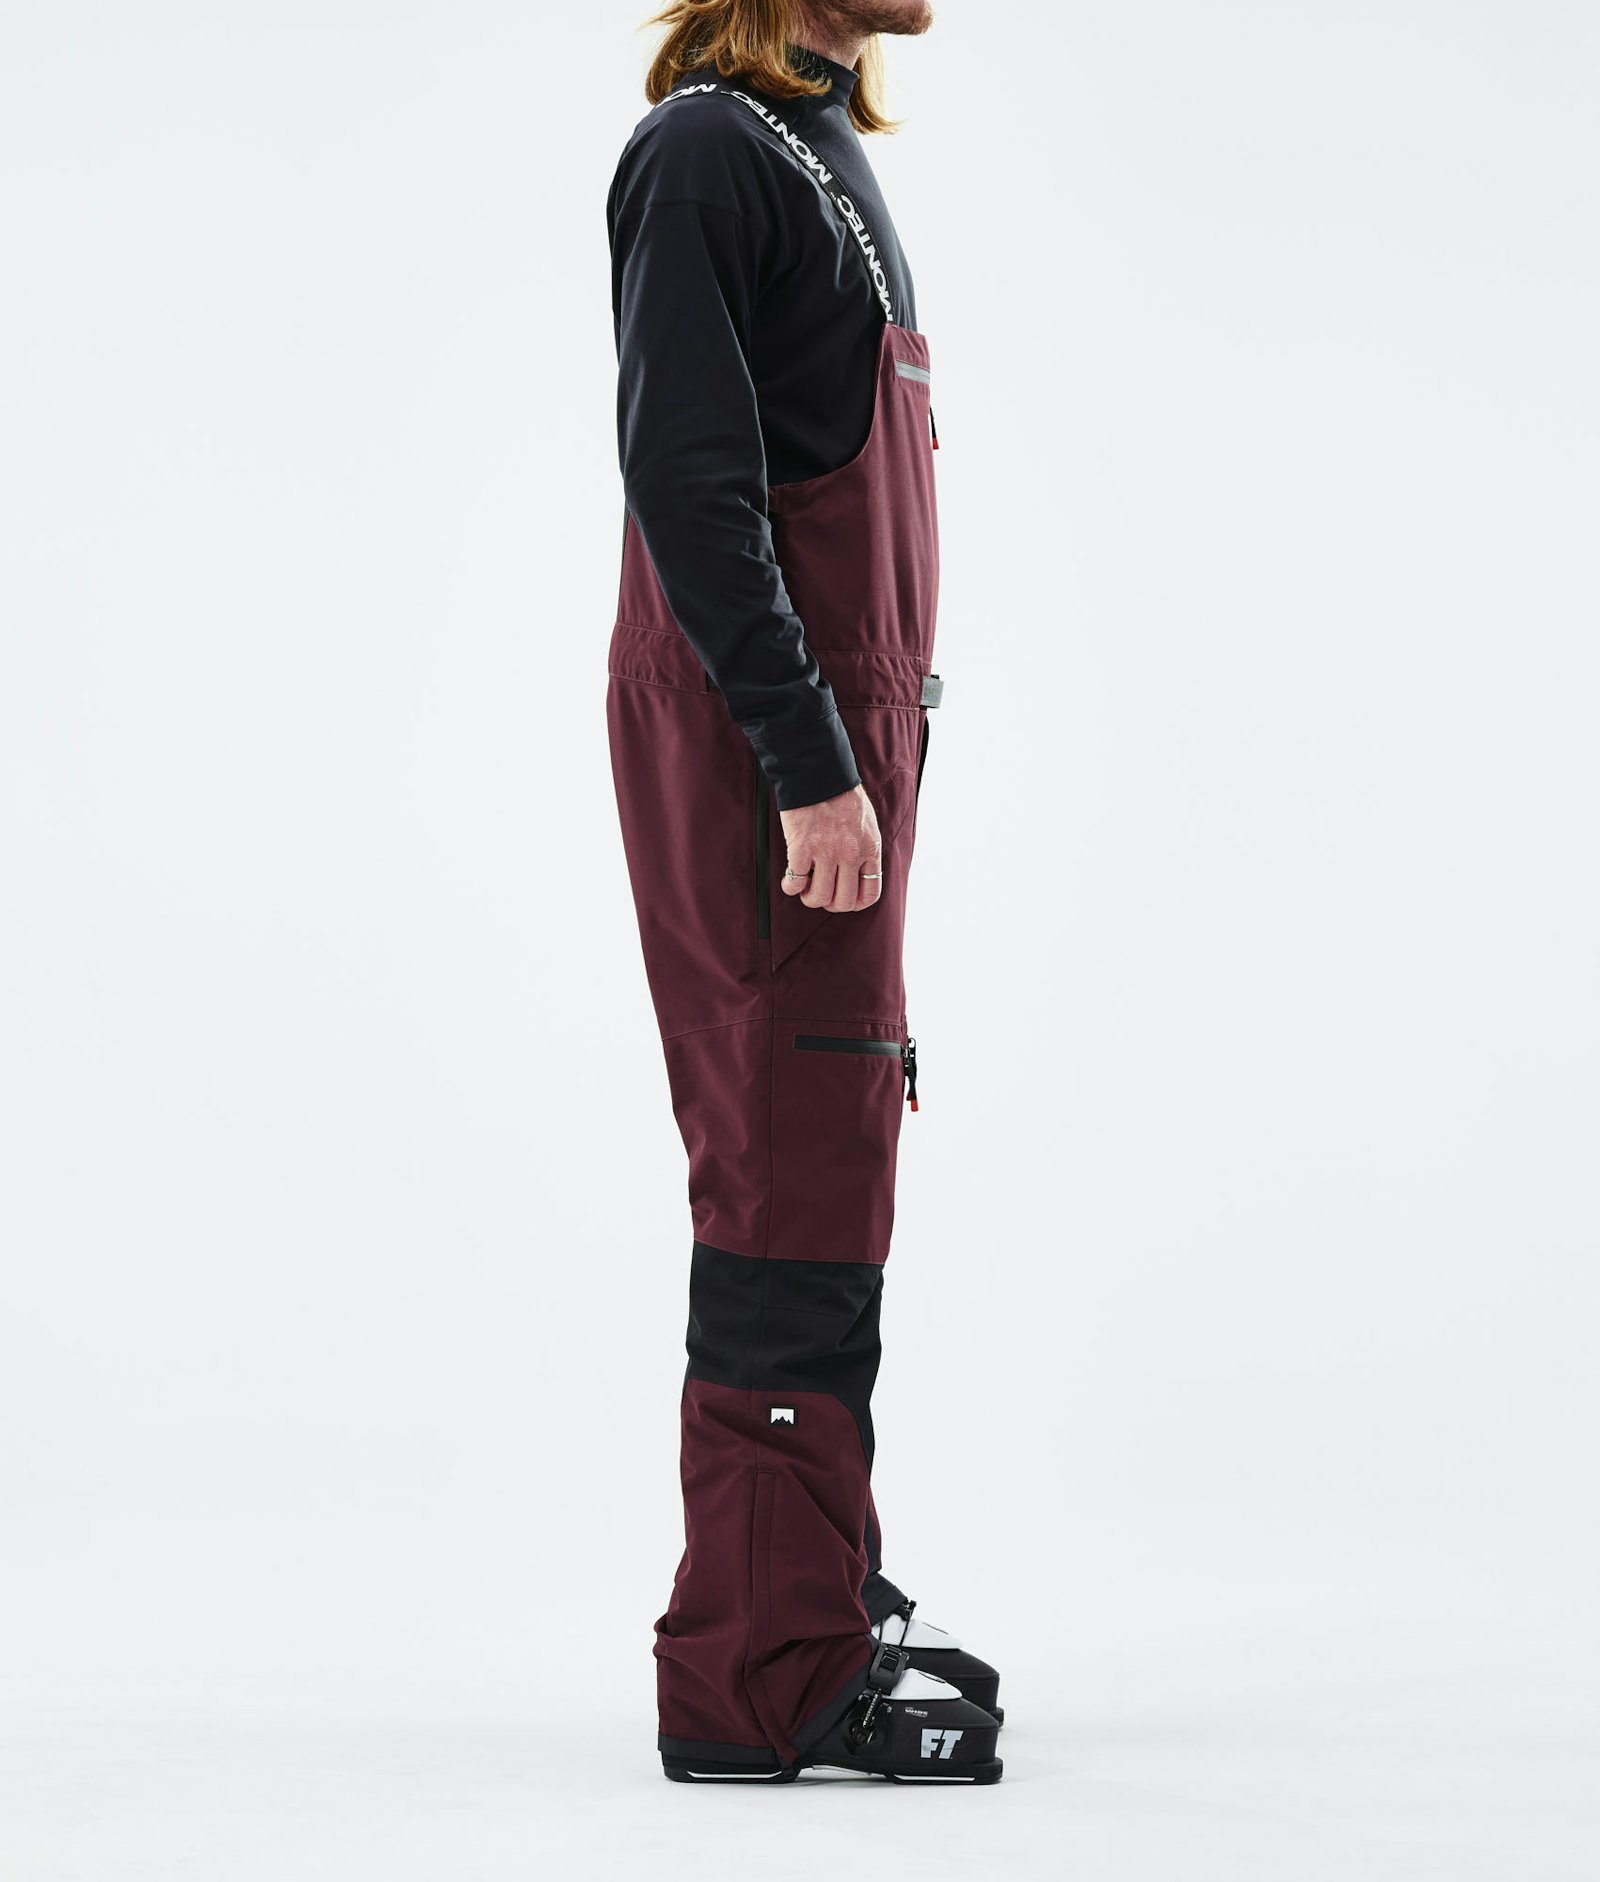 Moss 2021 Pantalon de Ski Homme Burgundy/Black